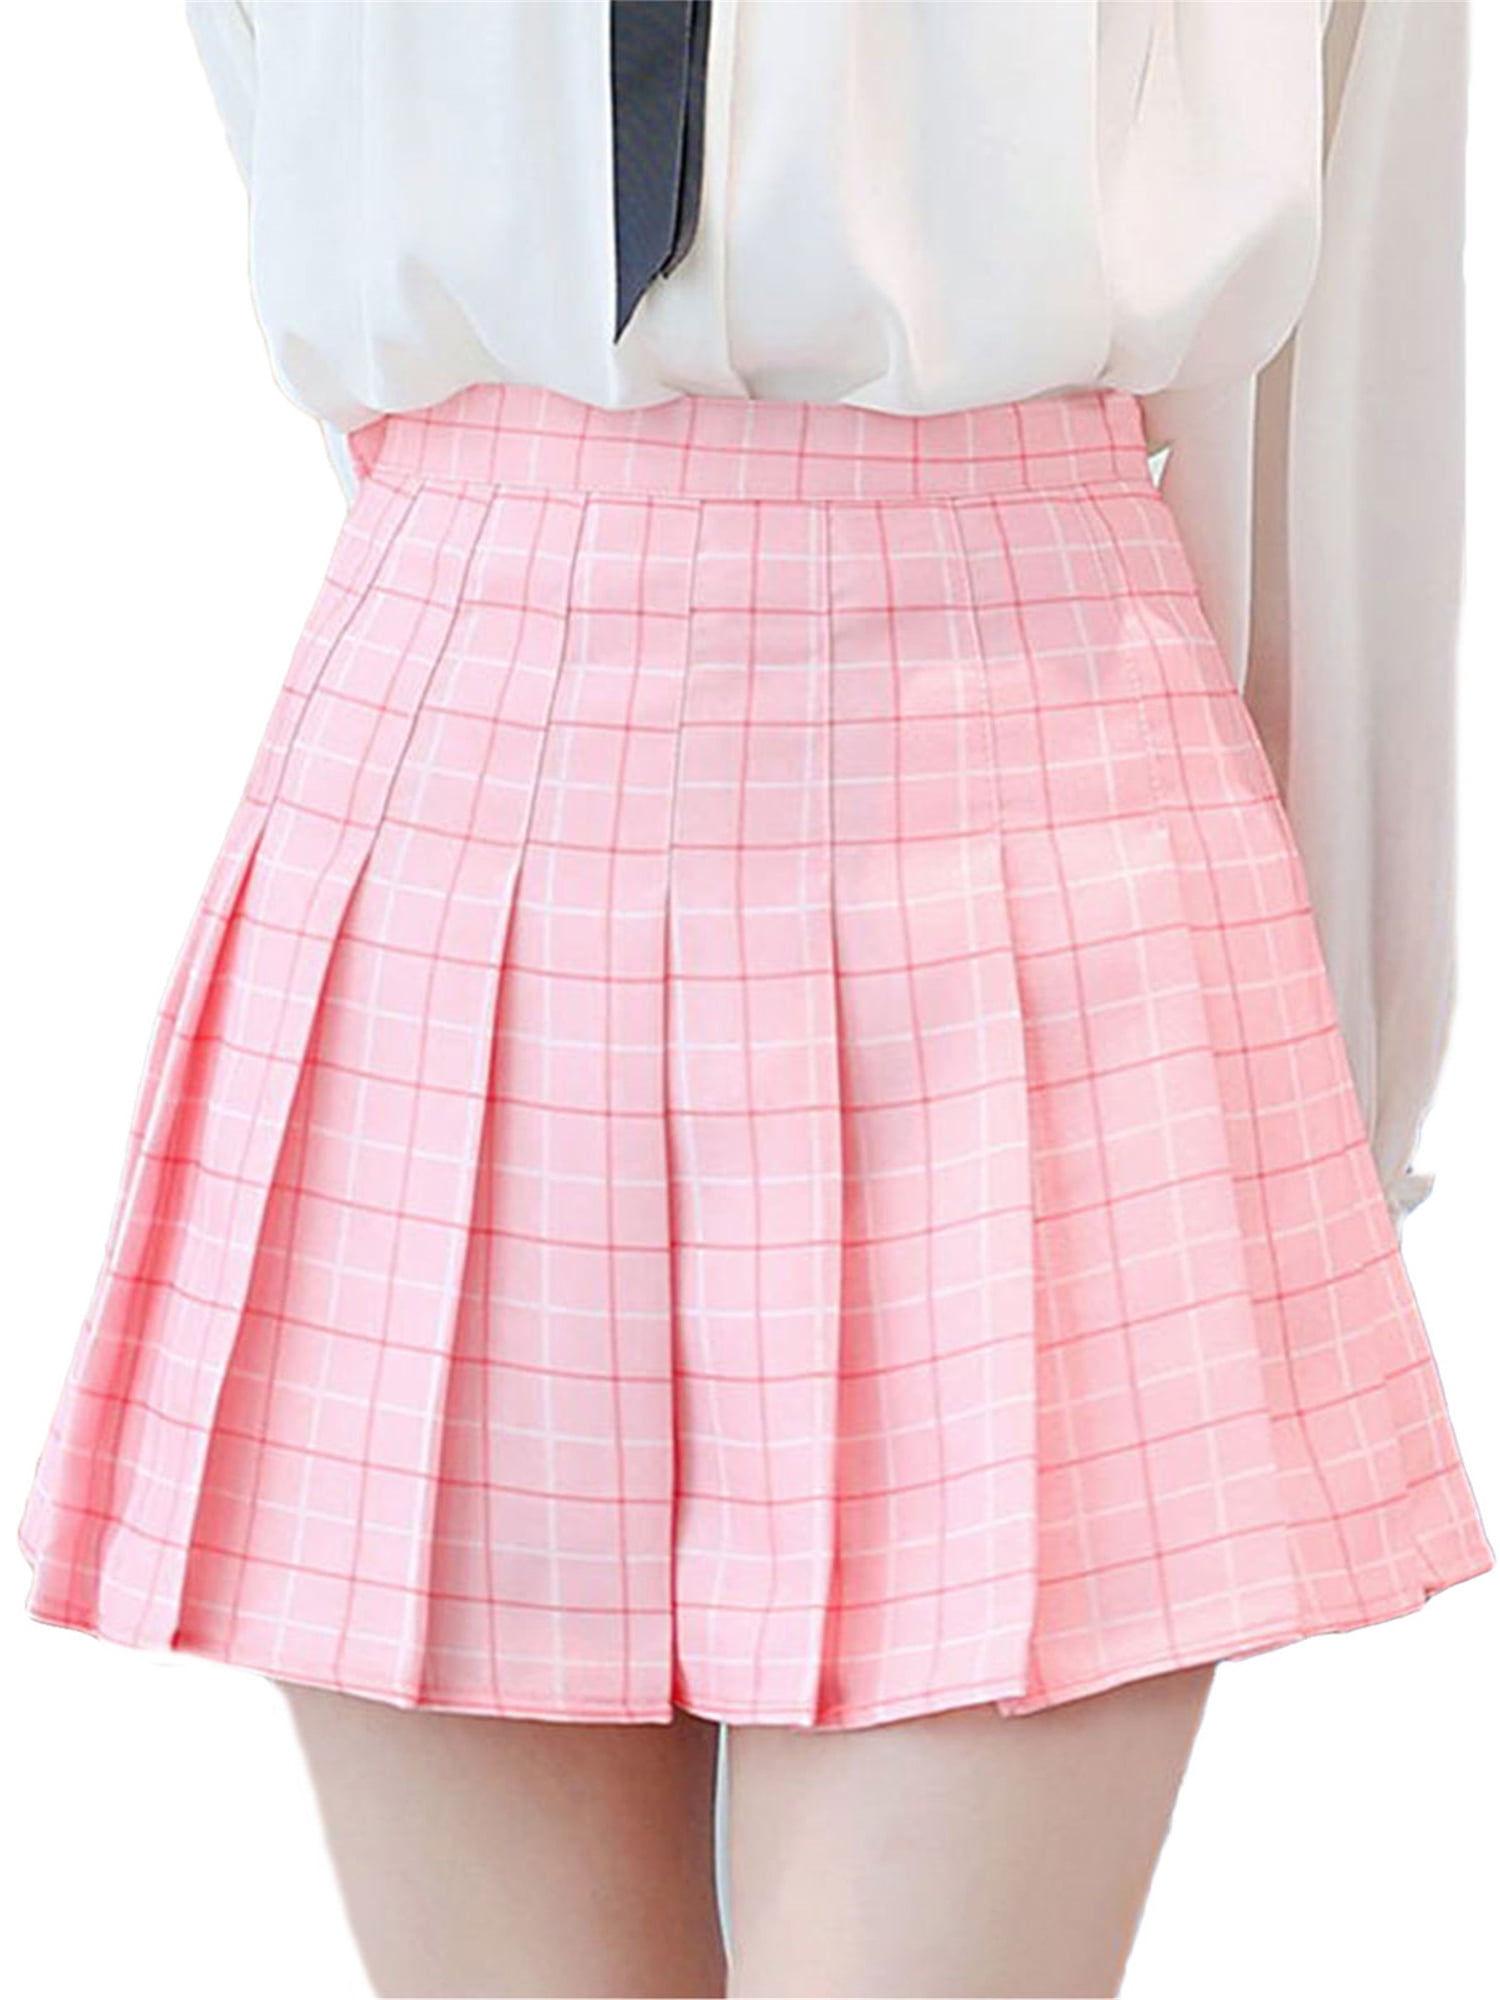 pink plaid tennis skirt